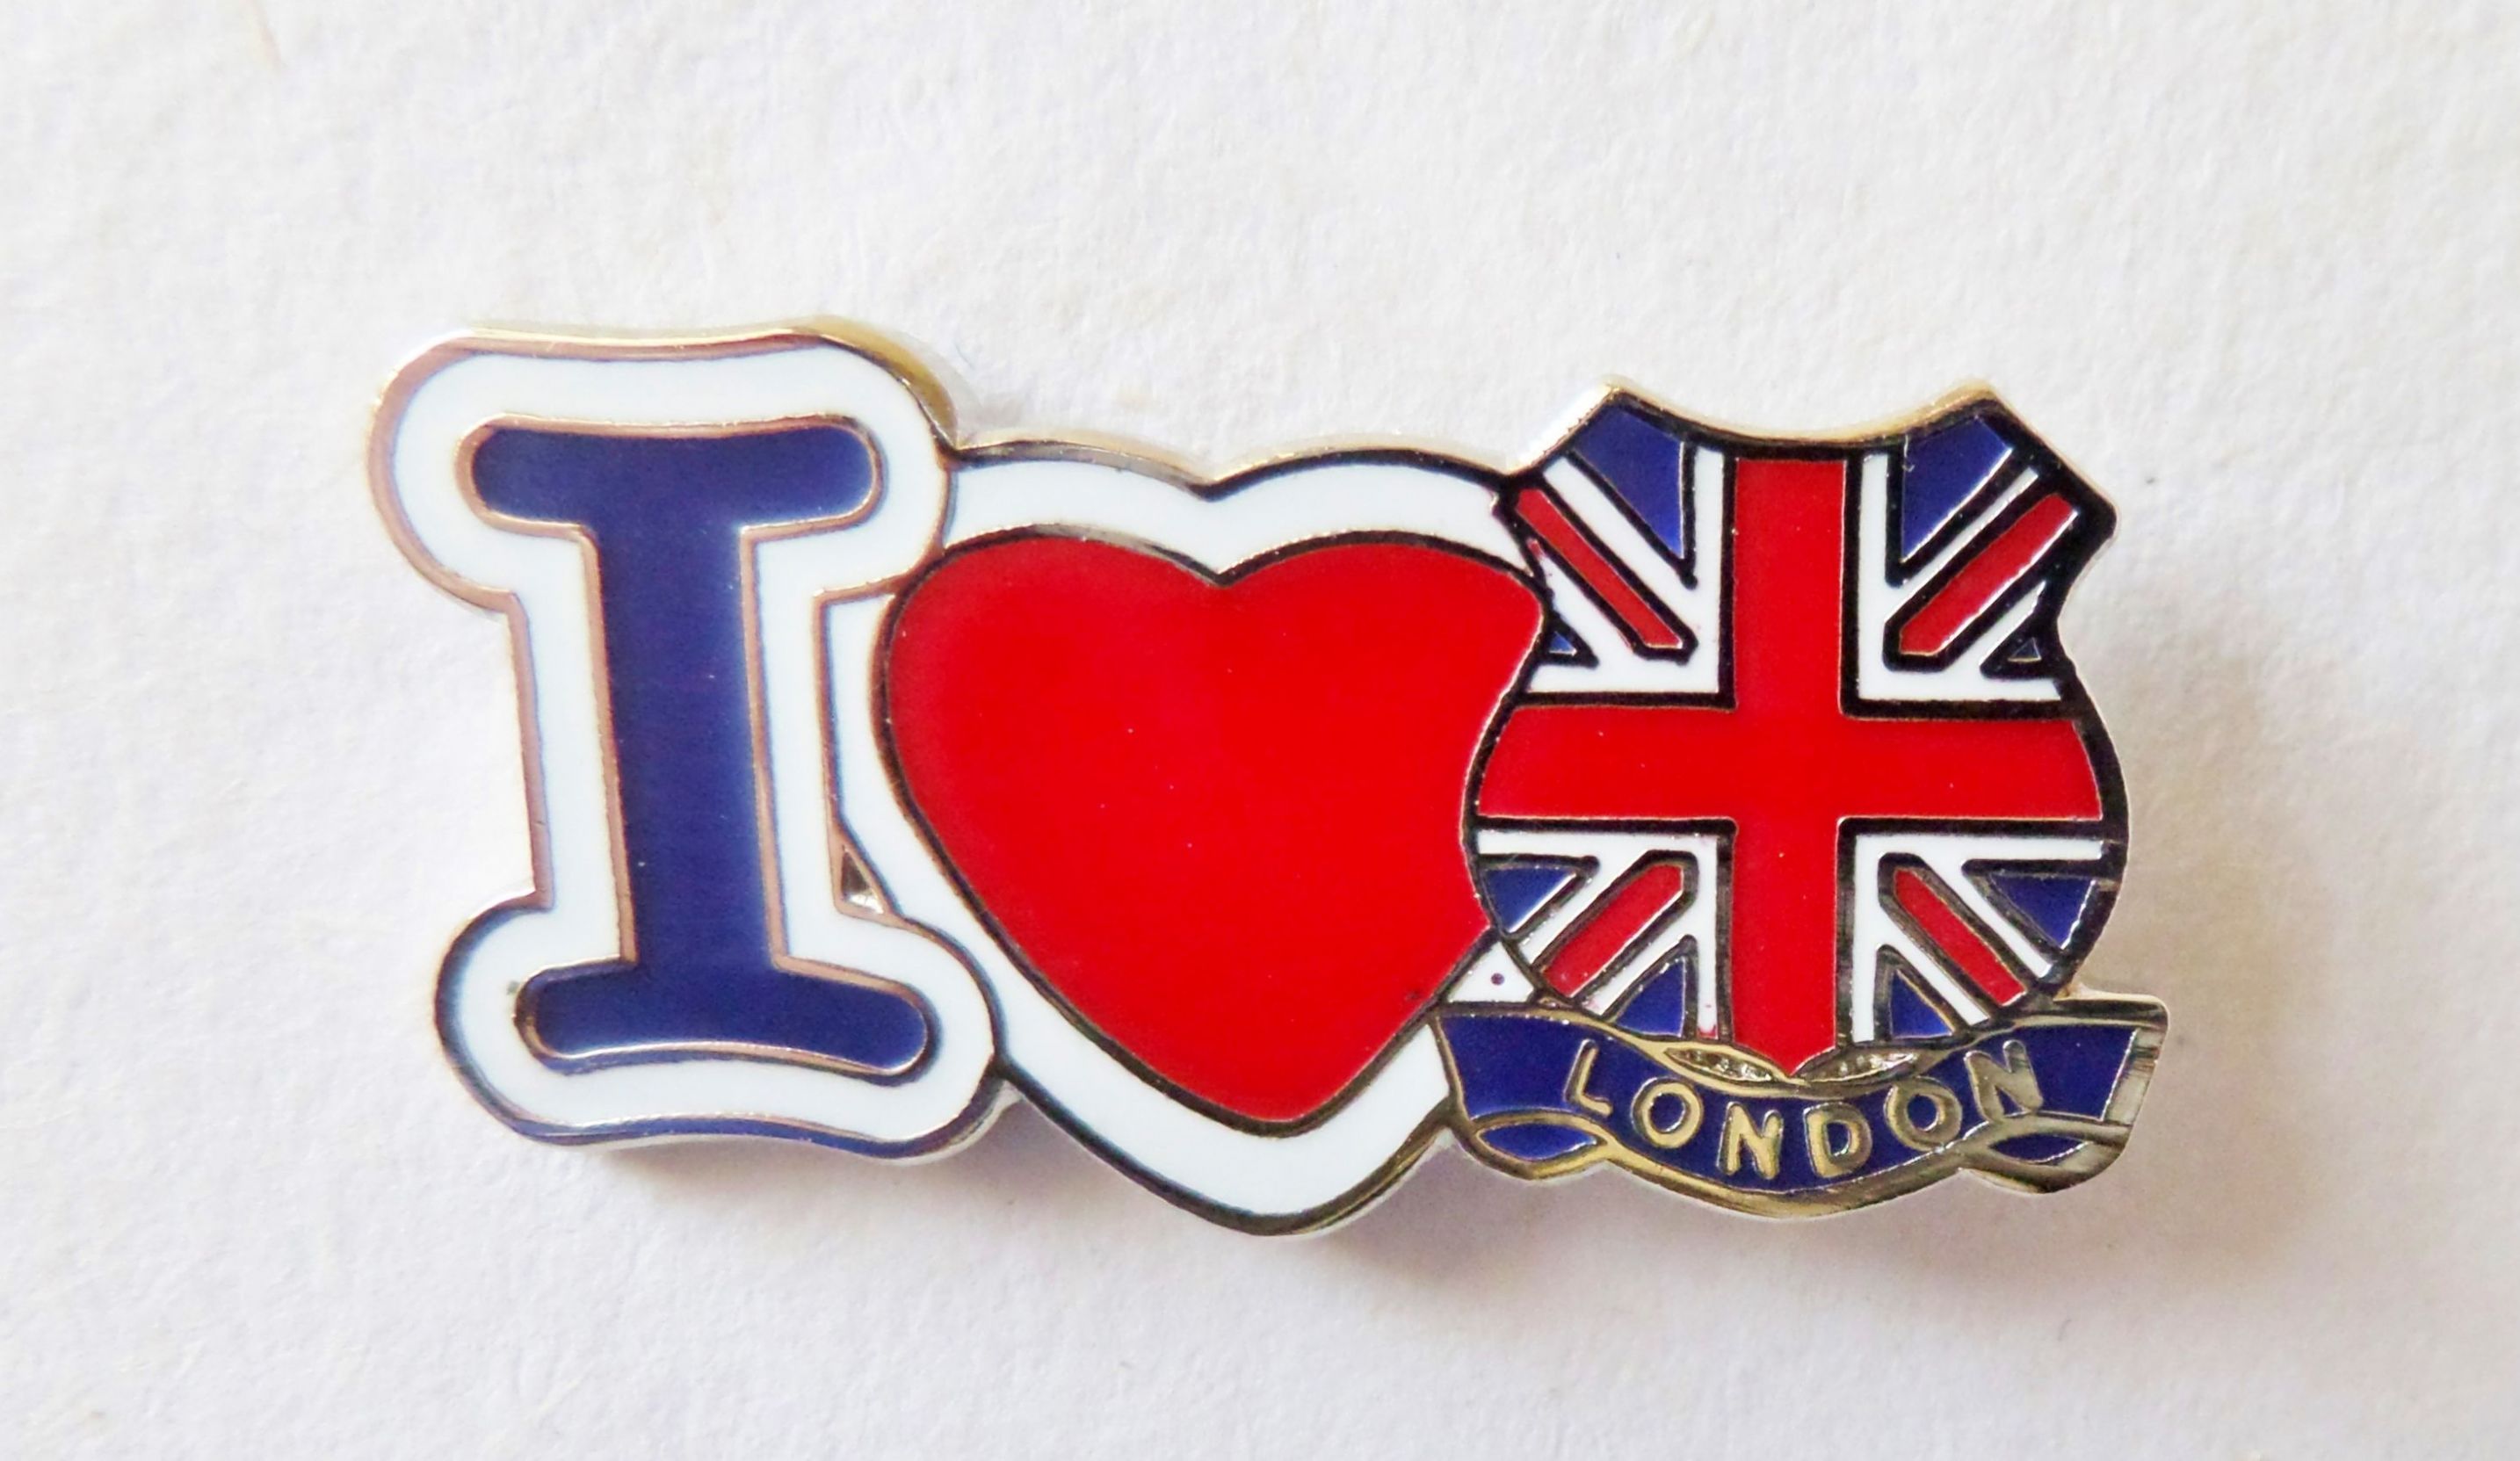 I Love London Union Jack Flag Pin Badge - T1084